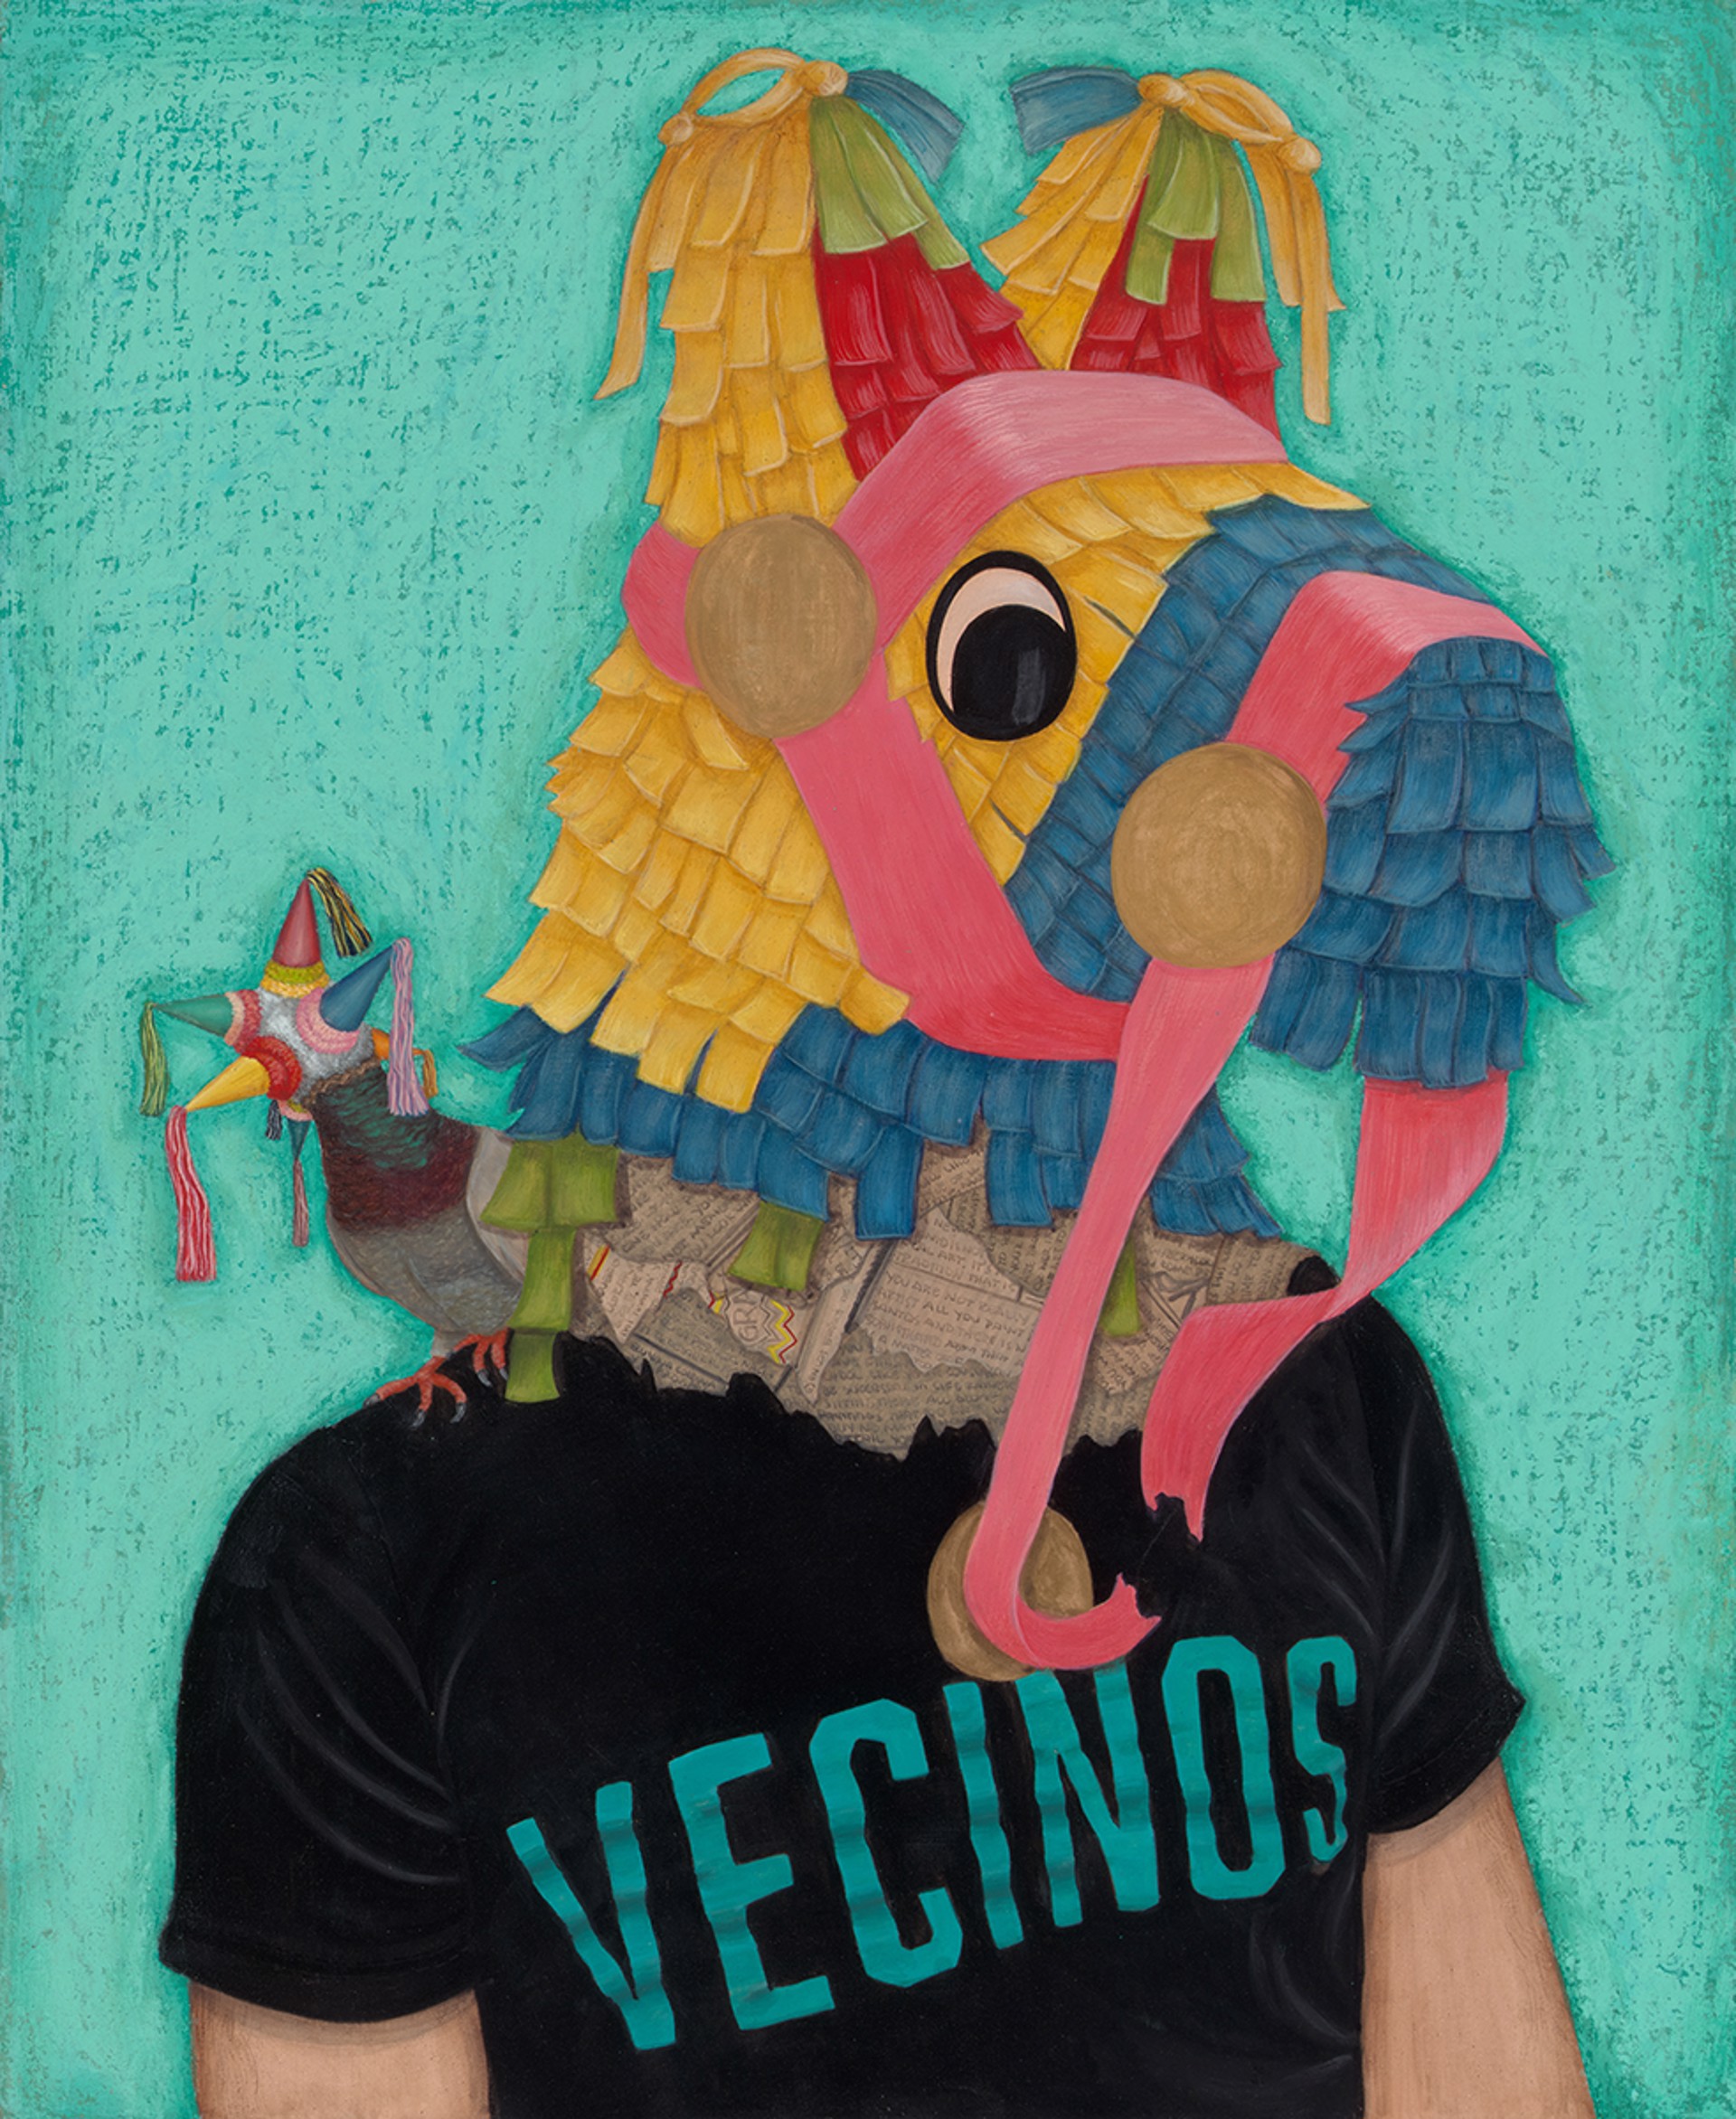 Mi Amigo the Pigeon by Vicente Telles, NM (b. 1983)